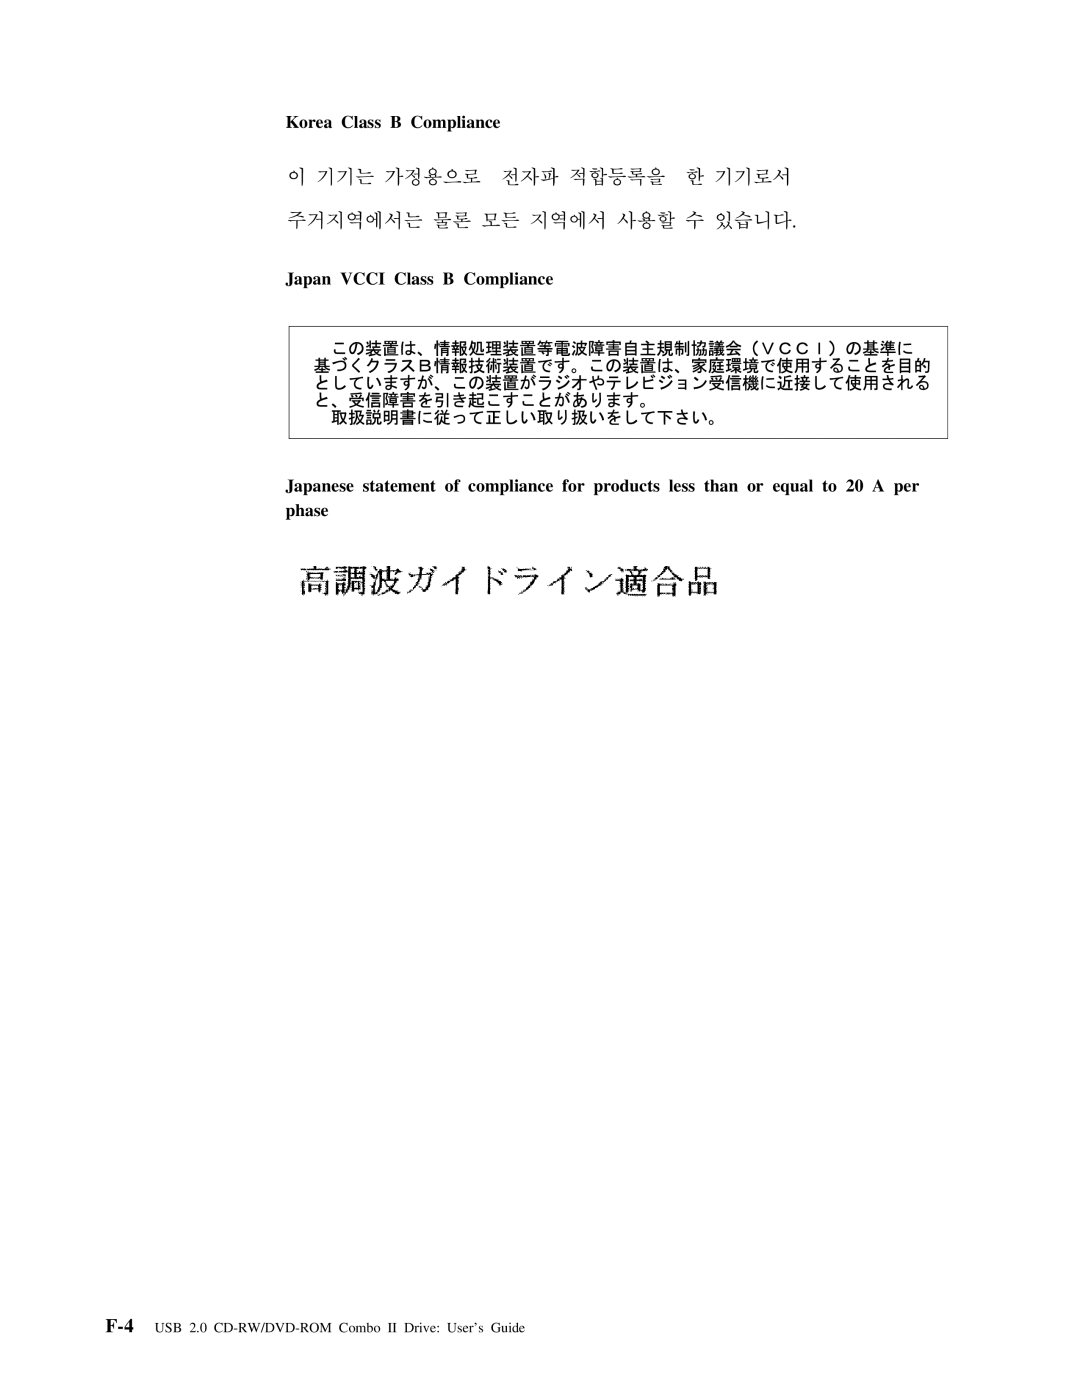 Lenovo 40Y8692, 40Y8637 manual Korea Class B Compliance, Japan VCCI Class B Compliance 